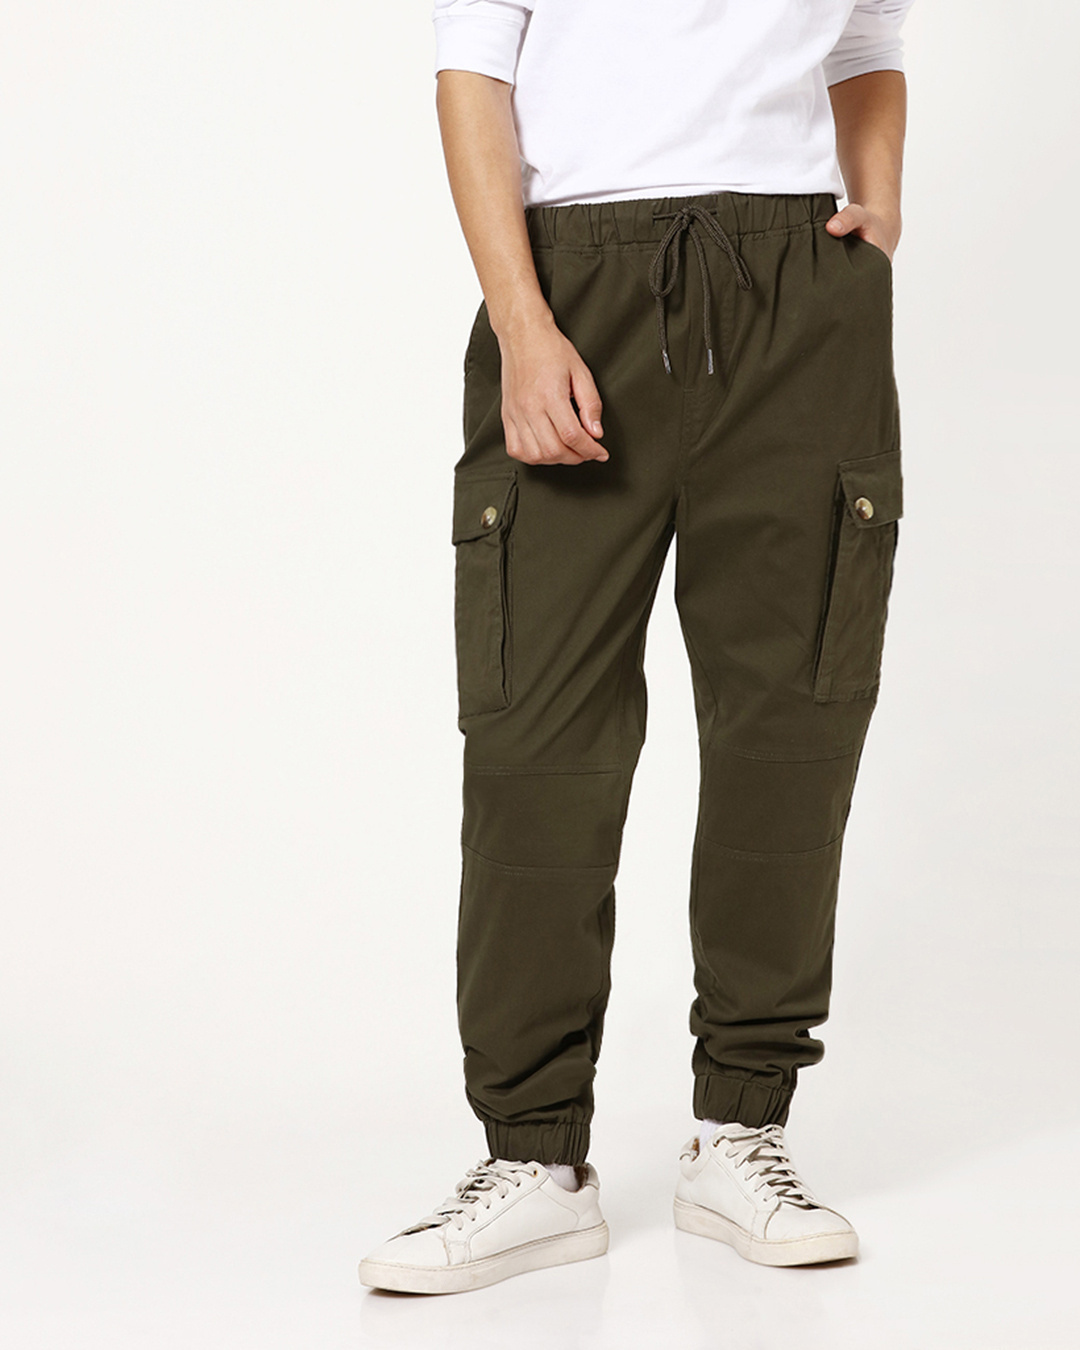 Buy Men's Olive Elastic Waistband Cargo Jogger Pants Online at Bewakoof